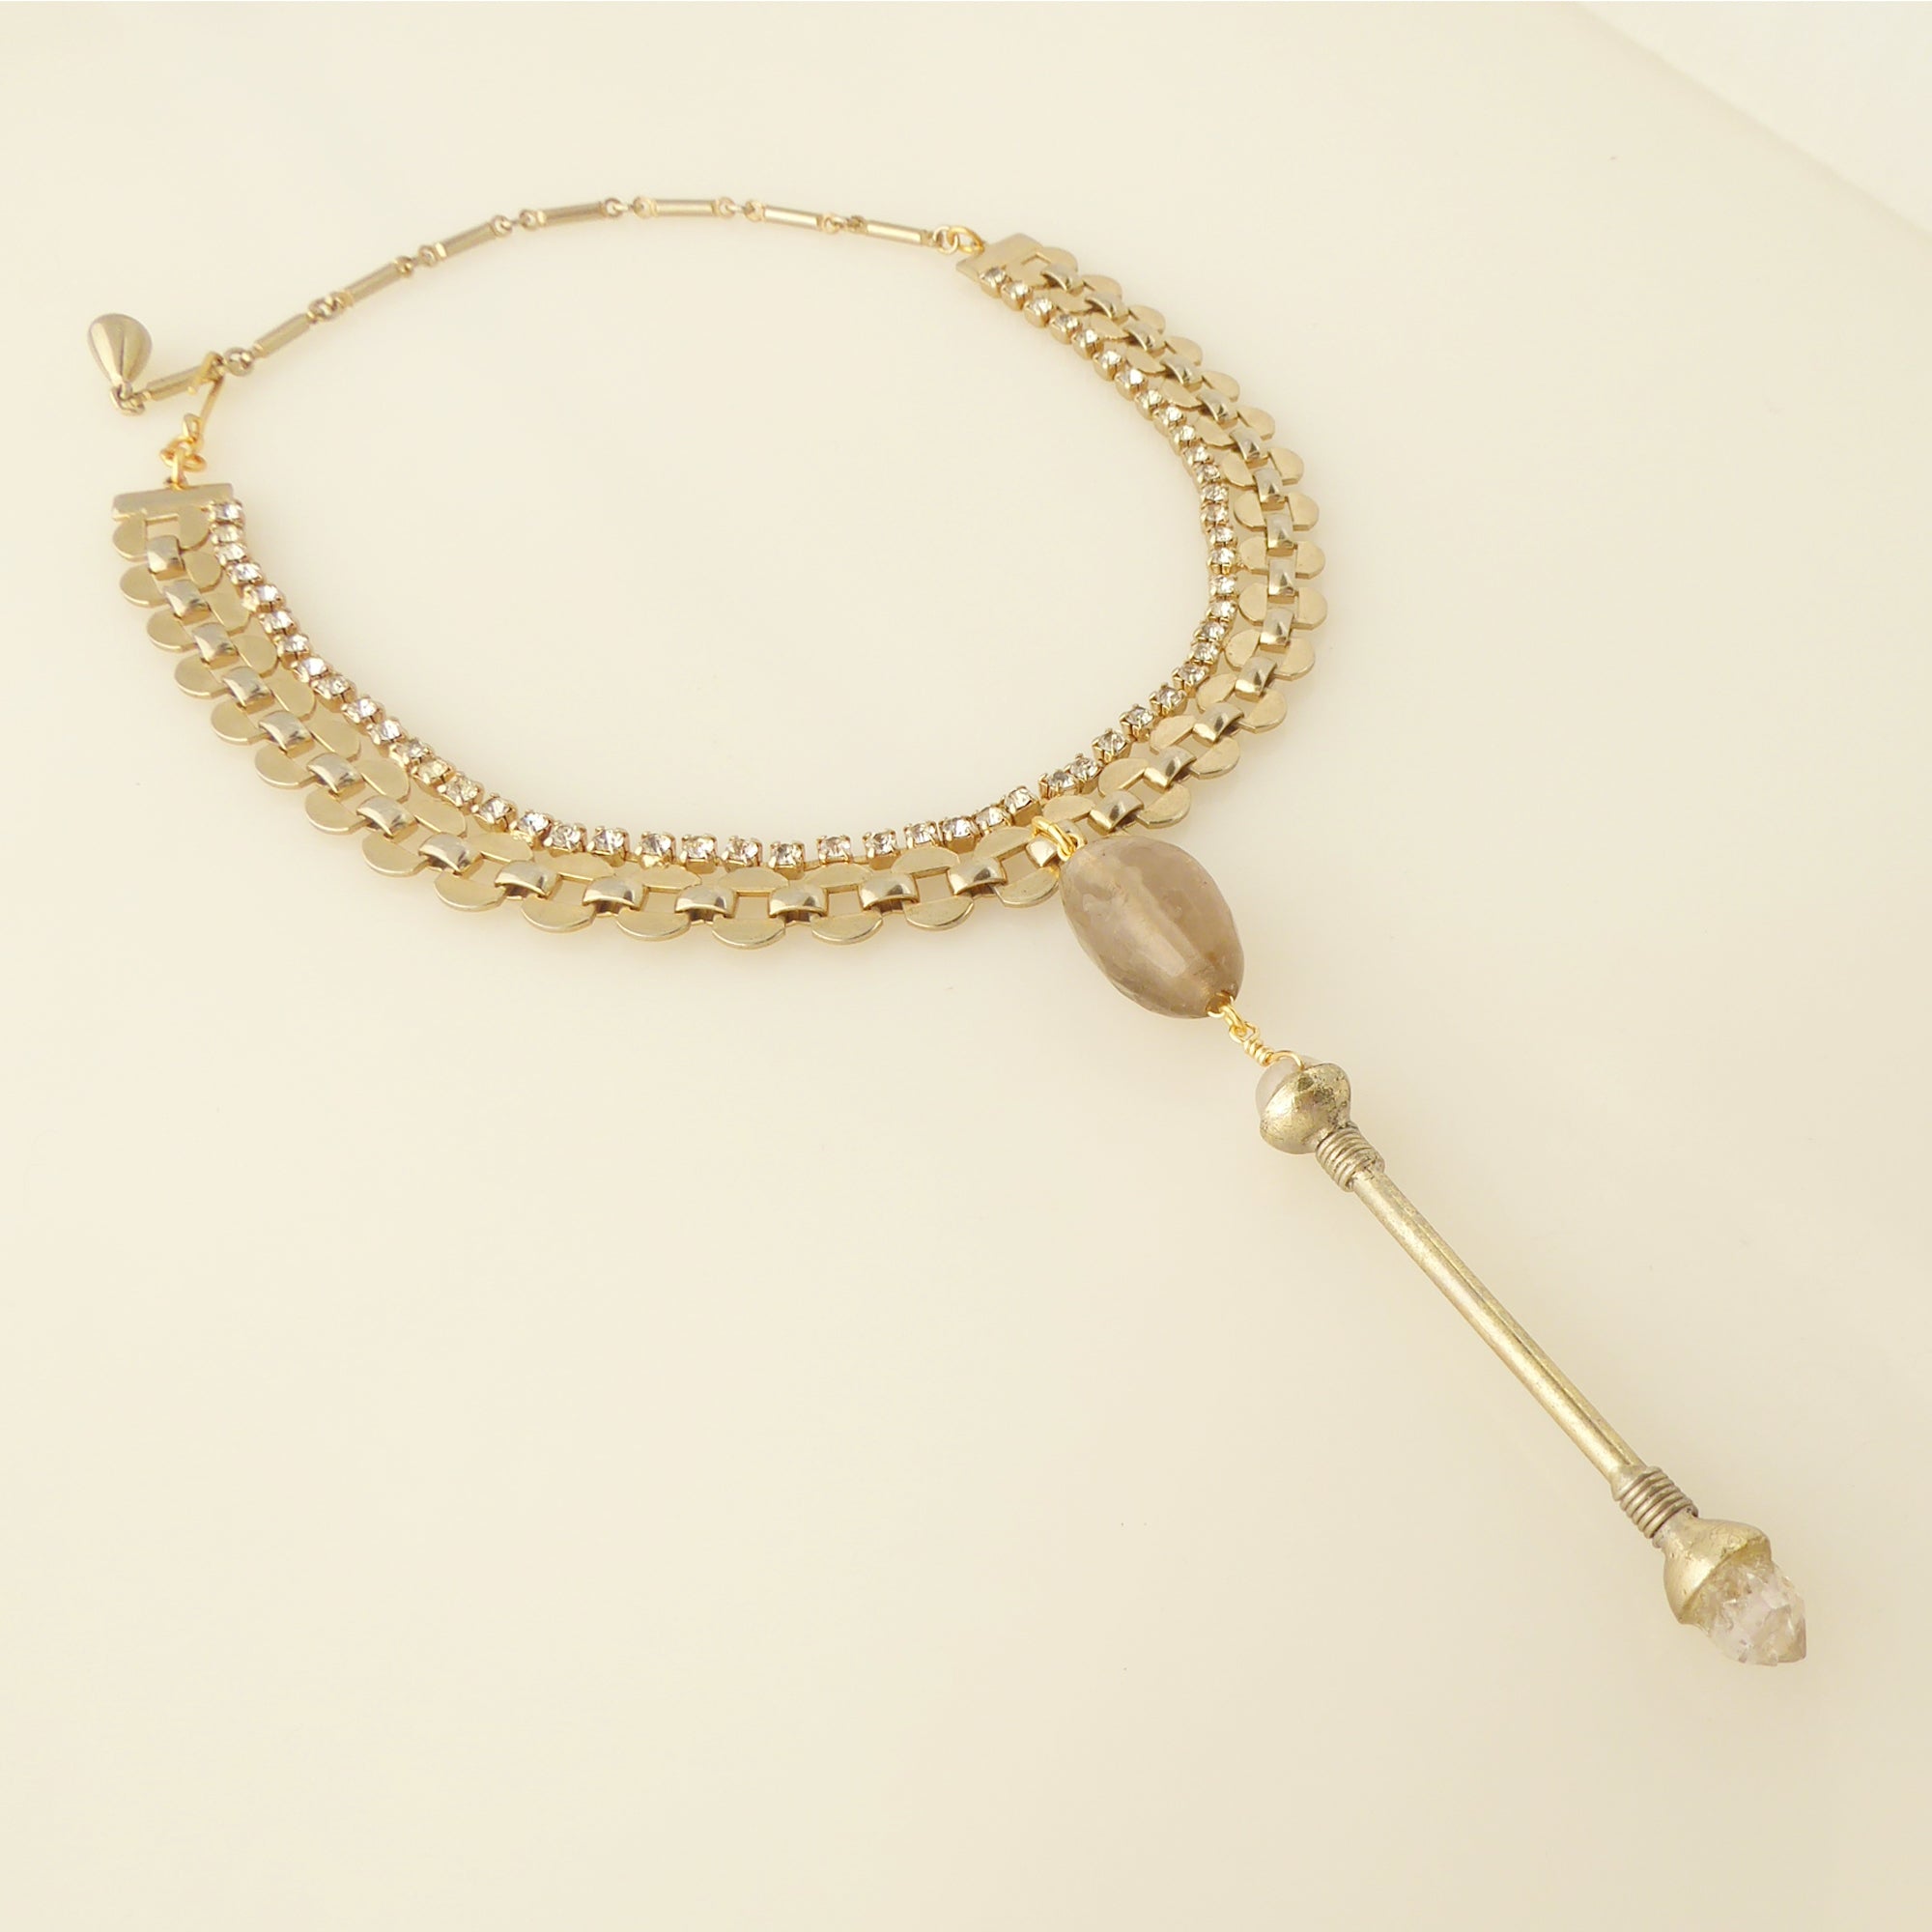 Crystal wand choker necklace by Jenny Dayco 2